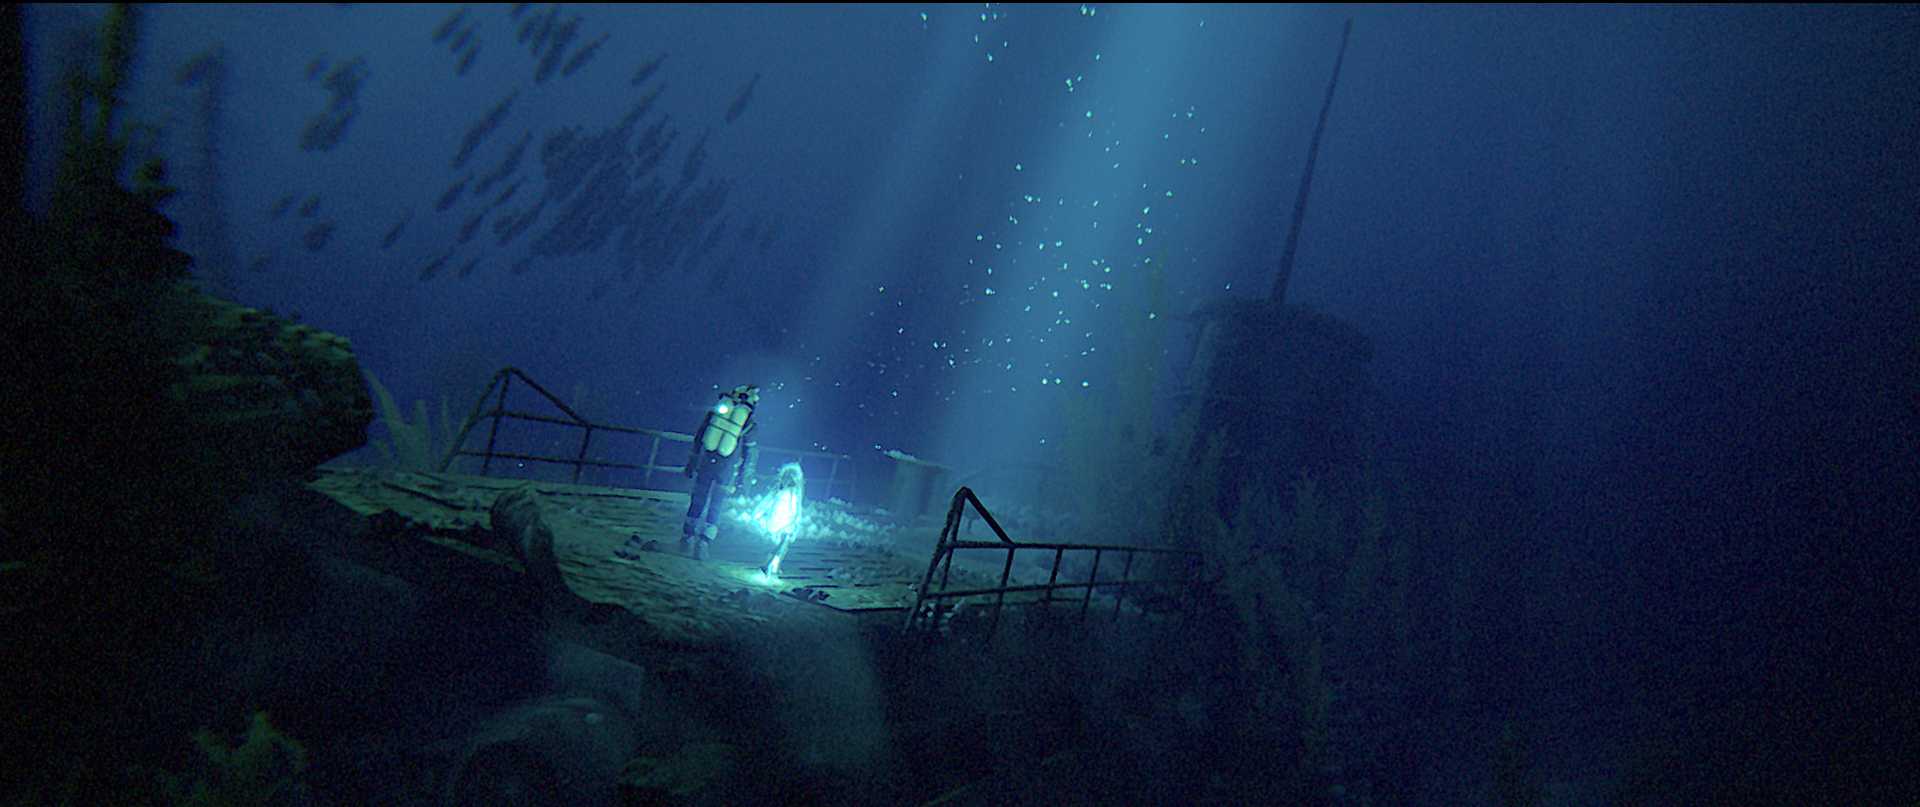 Under the Waves RECENSIONE C’è una splendida fauna sottomarina